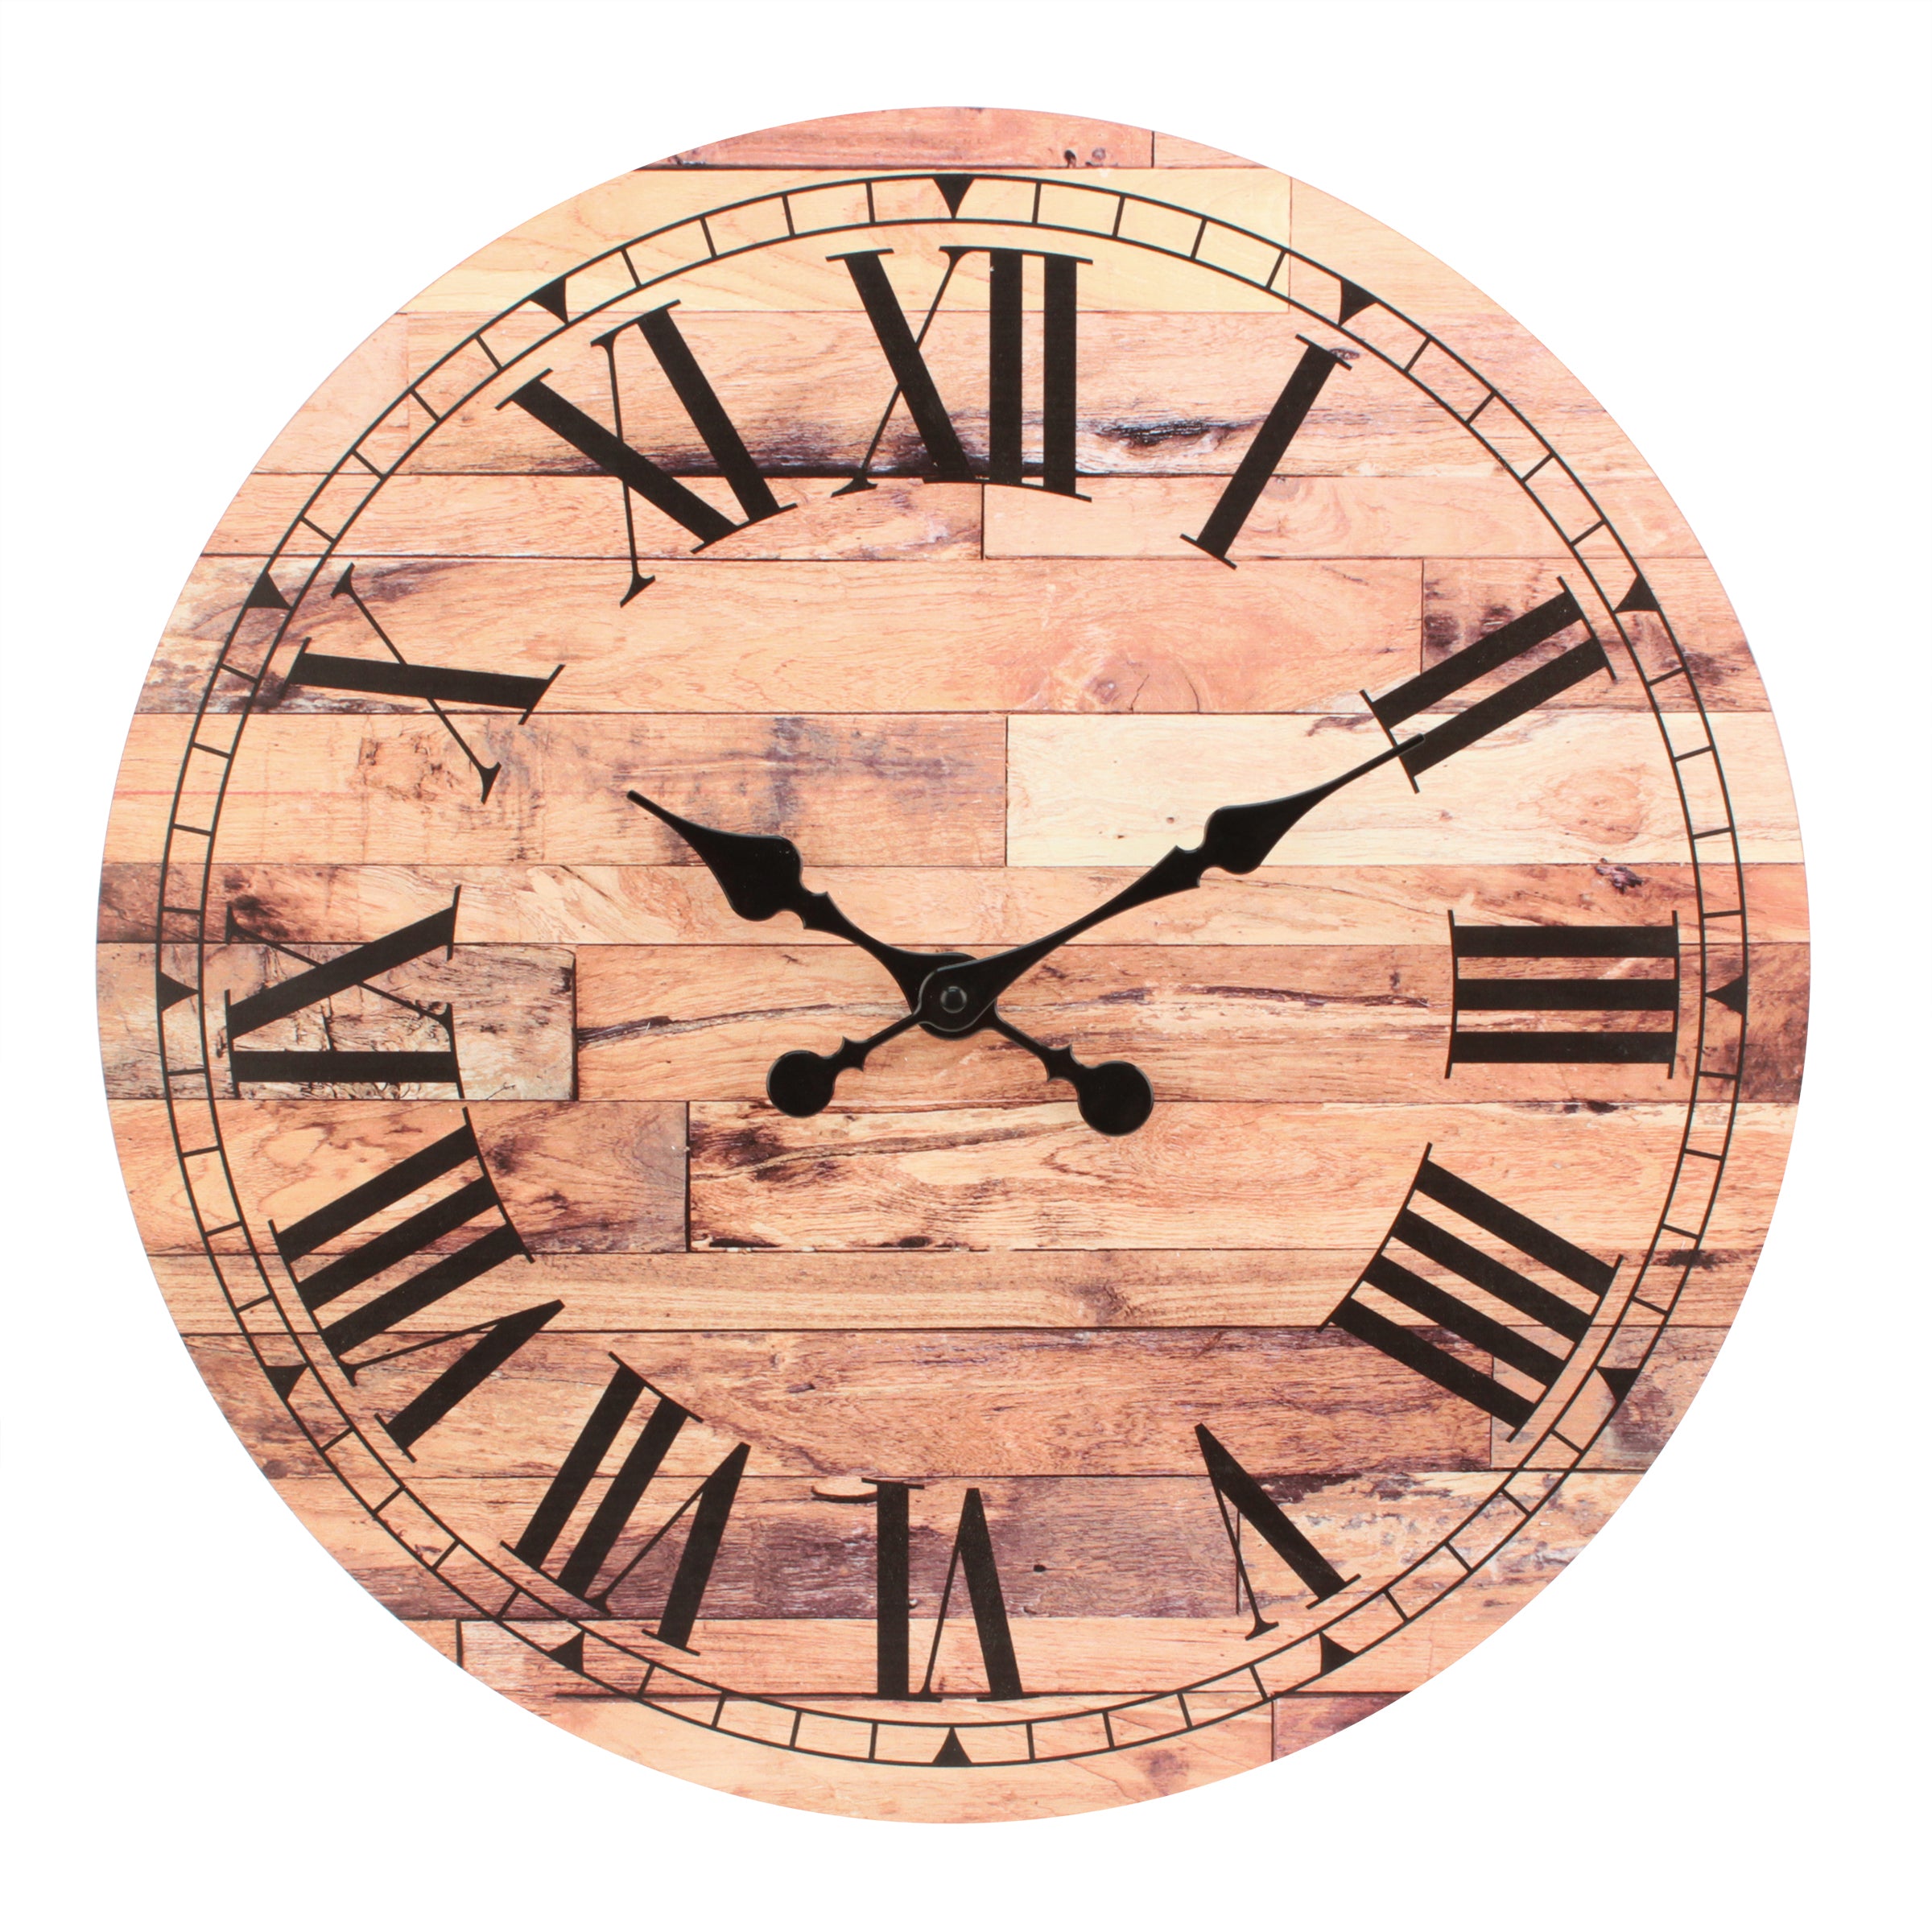 18” Roman Numeral Wooden MDF Wall Clock (WS)